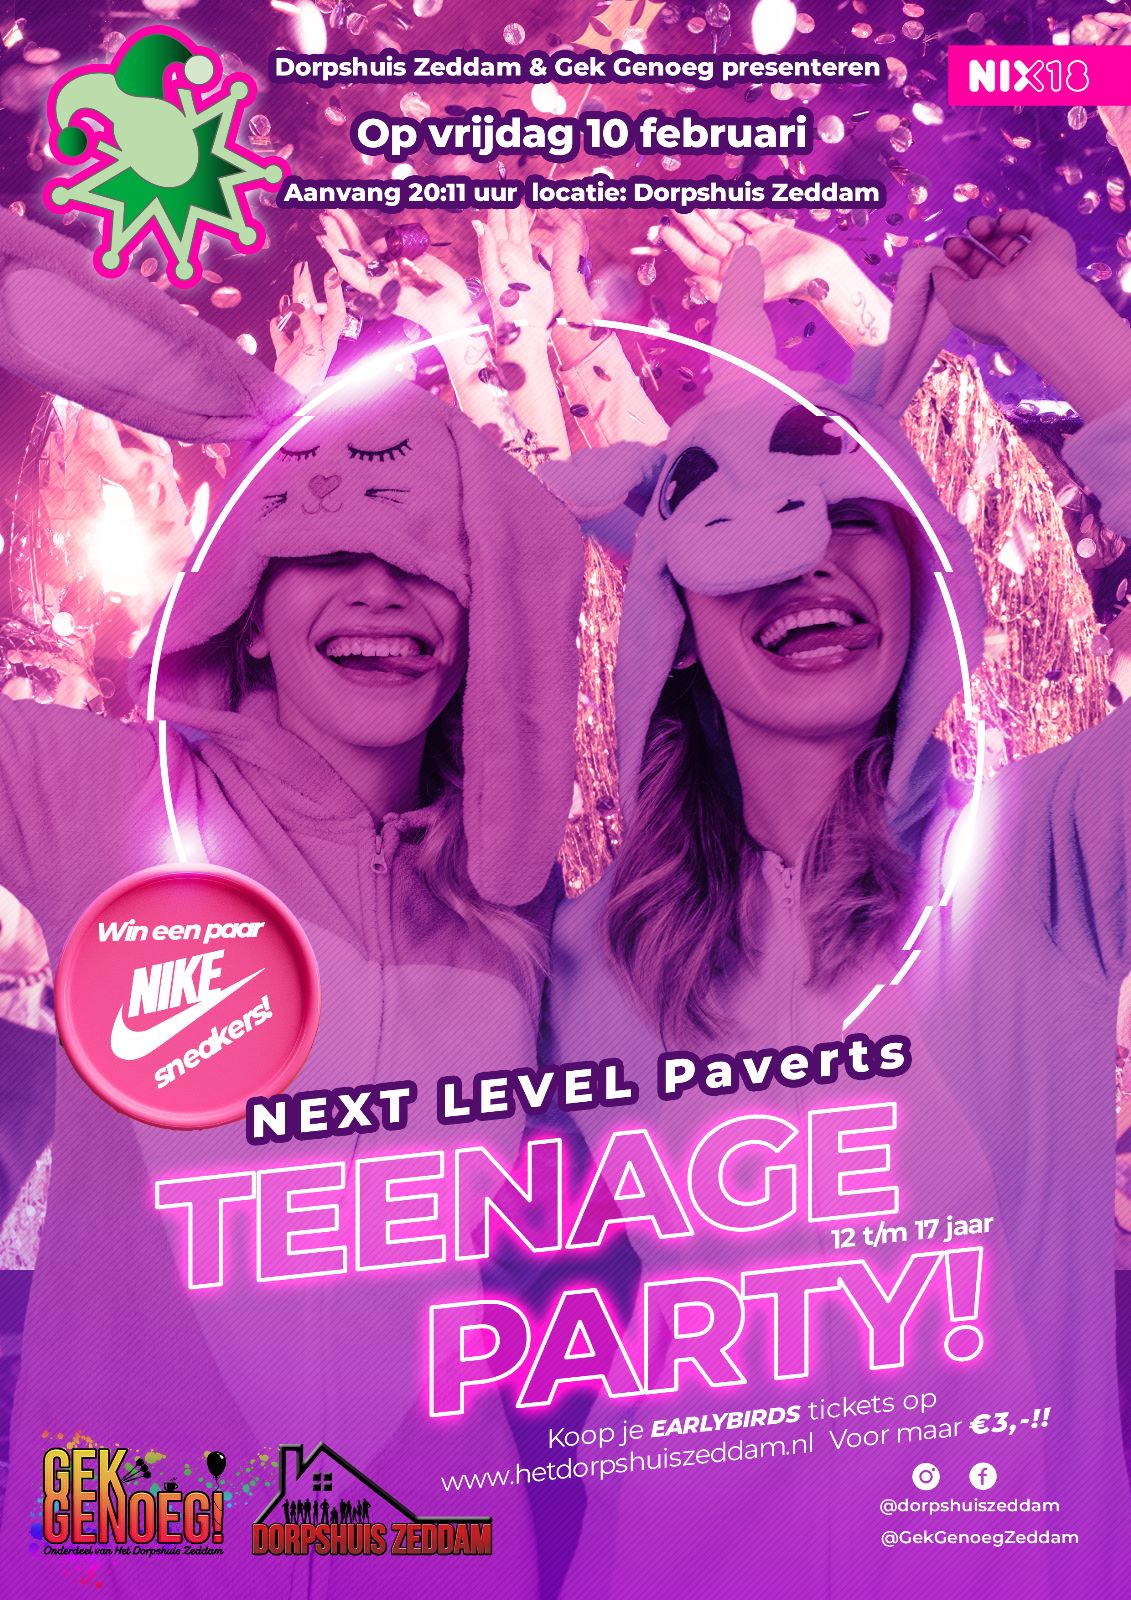 Next Level Teenage Party